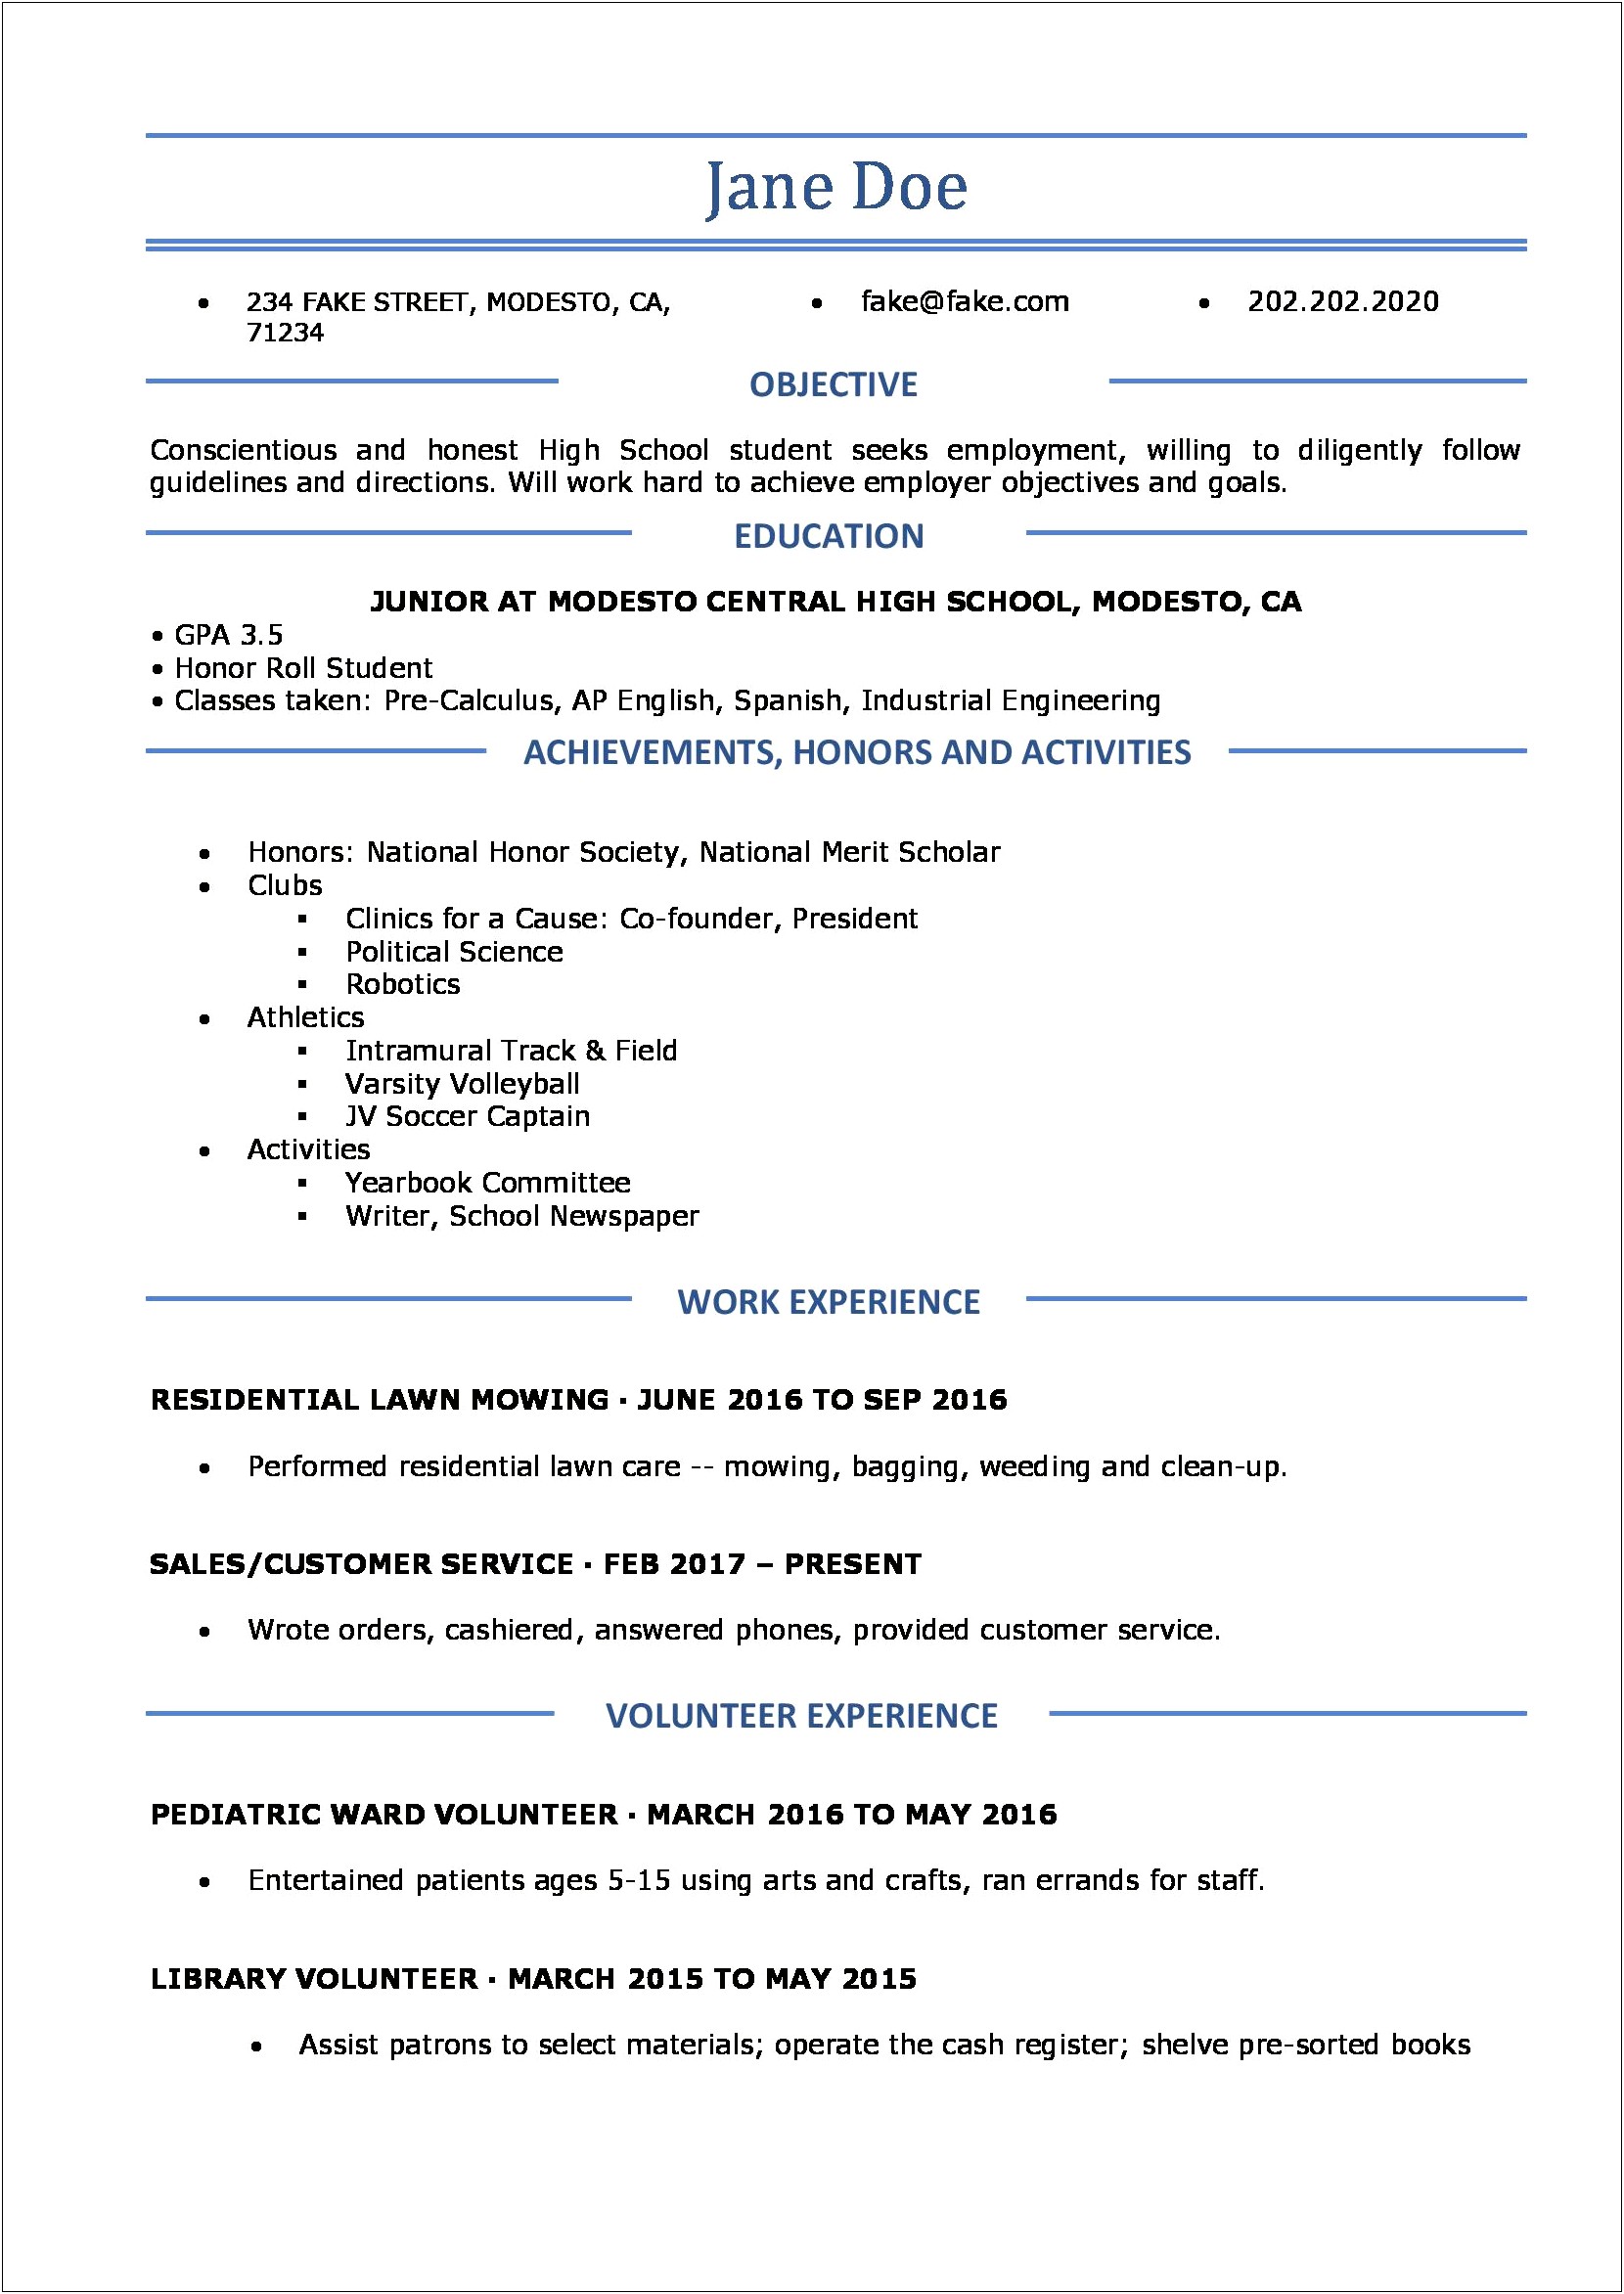 Basic Resume Format For High School Student